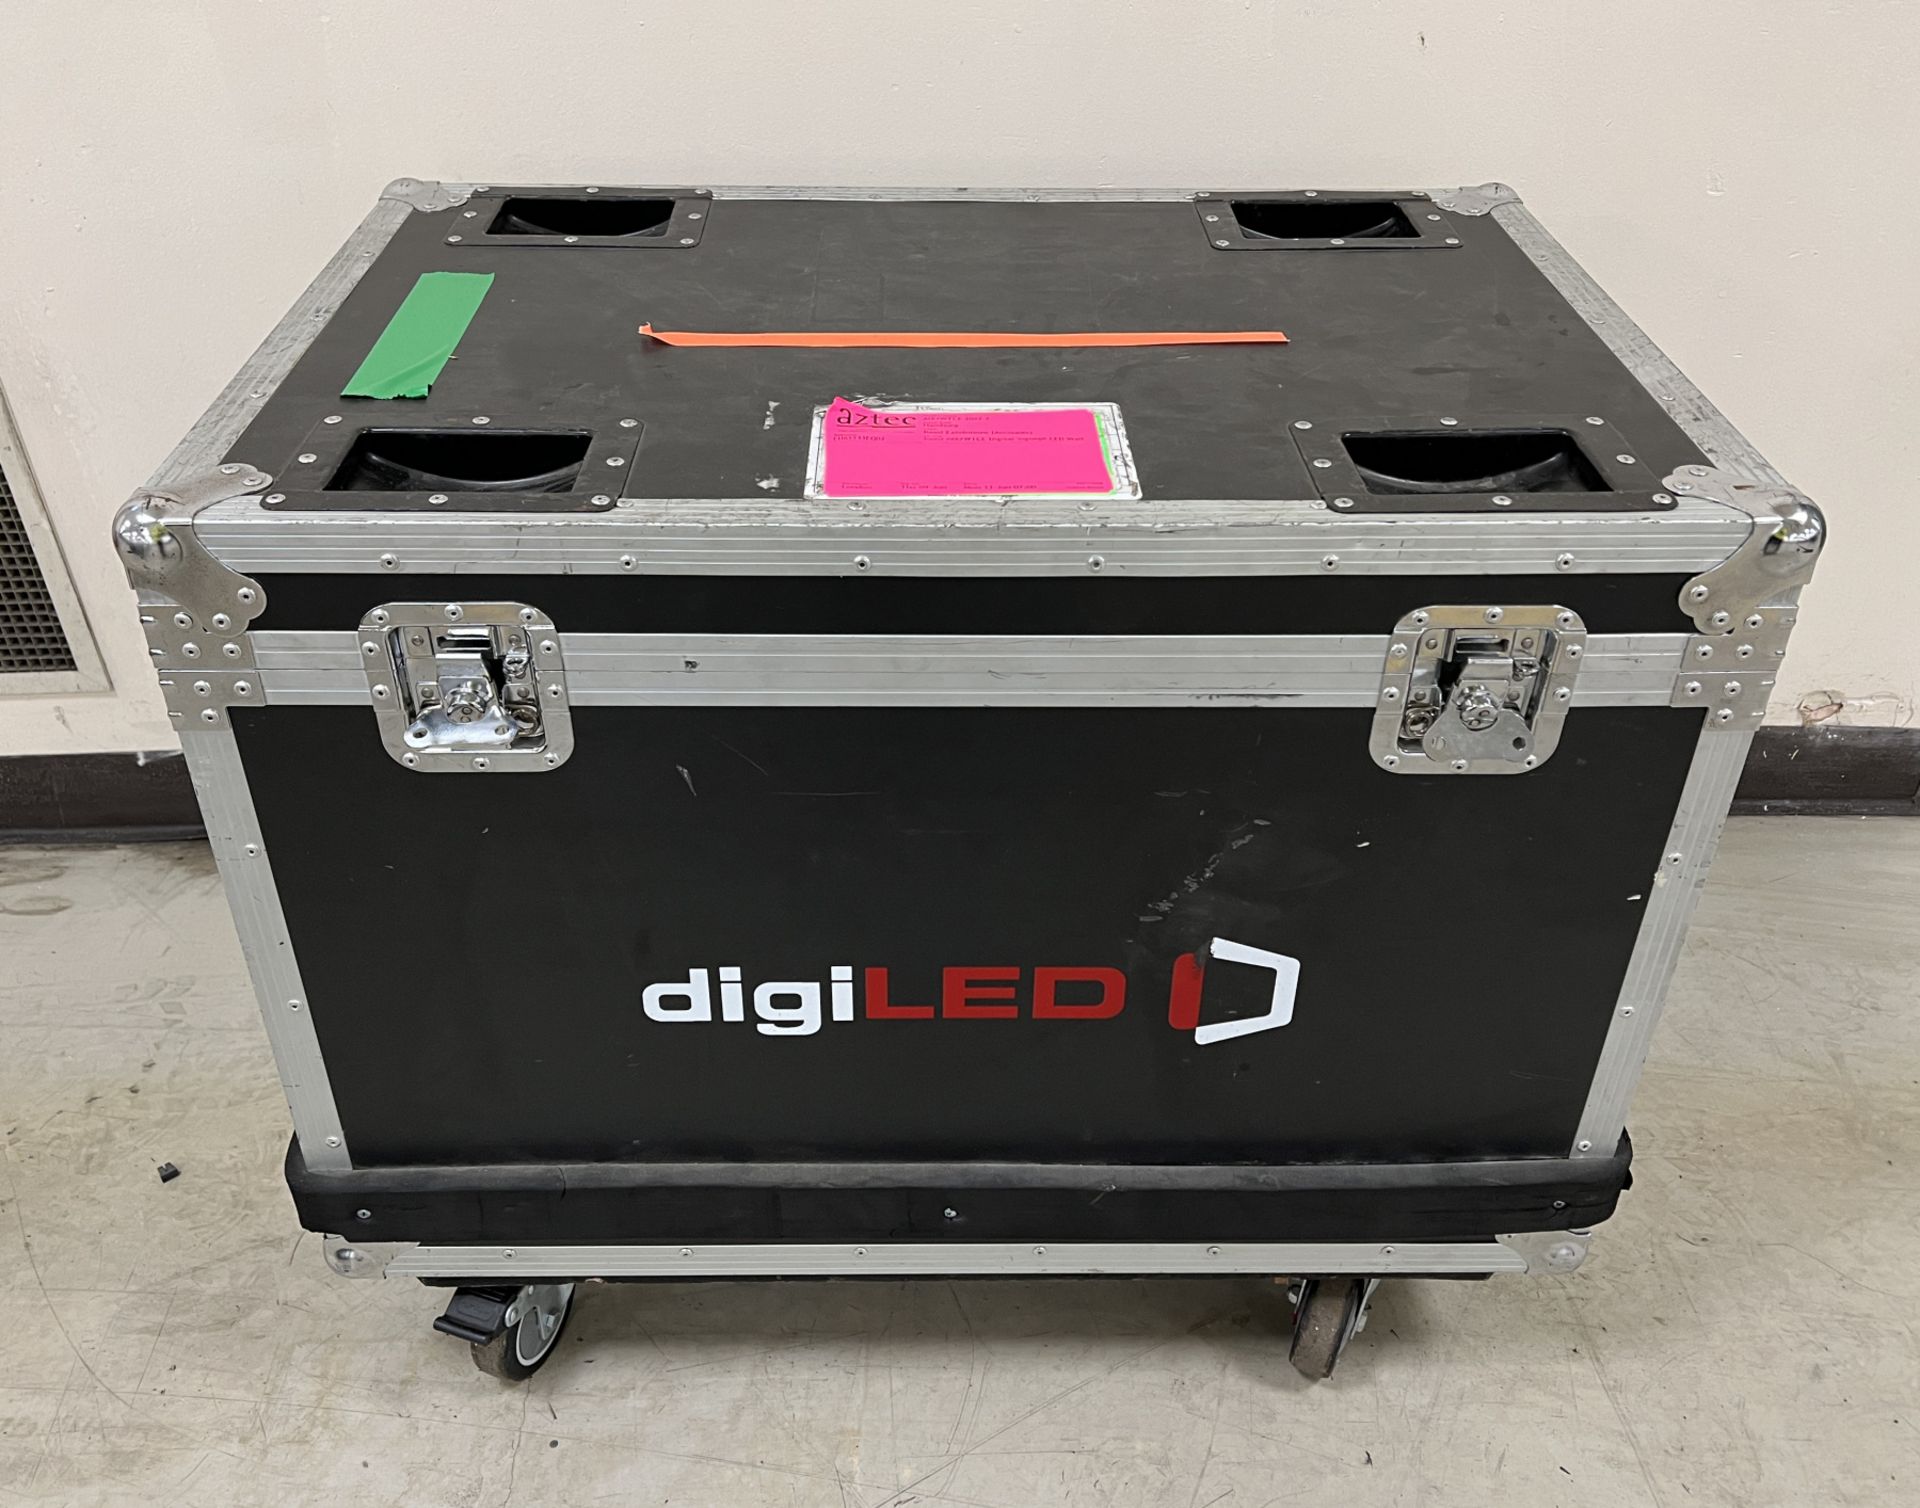 Digi LED HRI3900 kit - 120 LED tiles housed in 20 wheeled flight cases - see description for details - Image 103 of 196